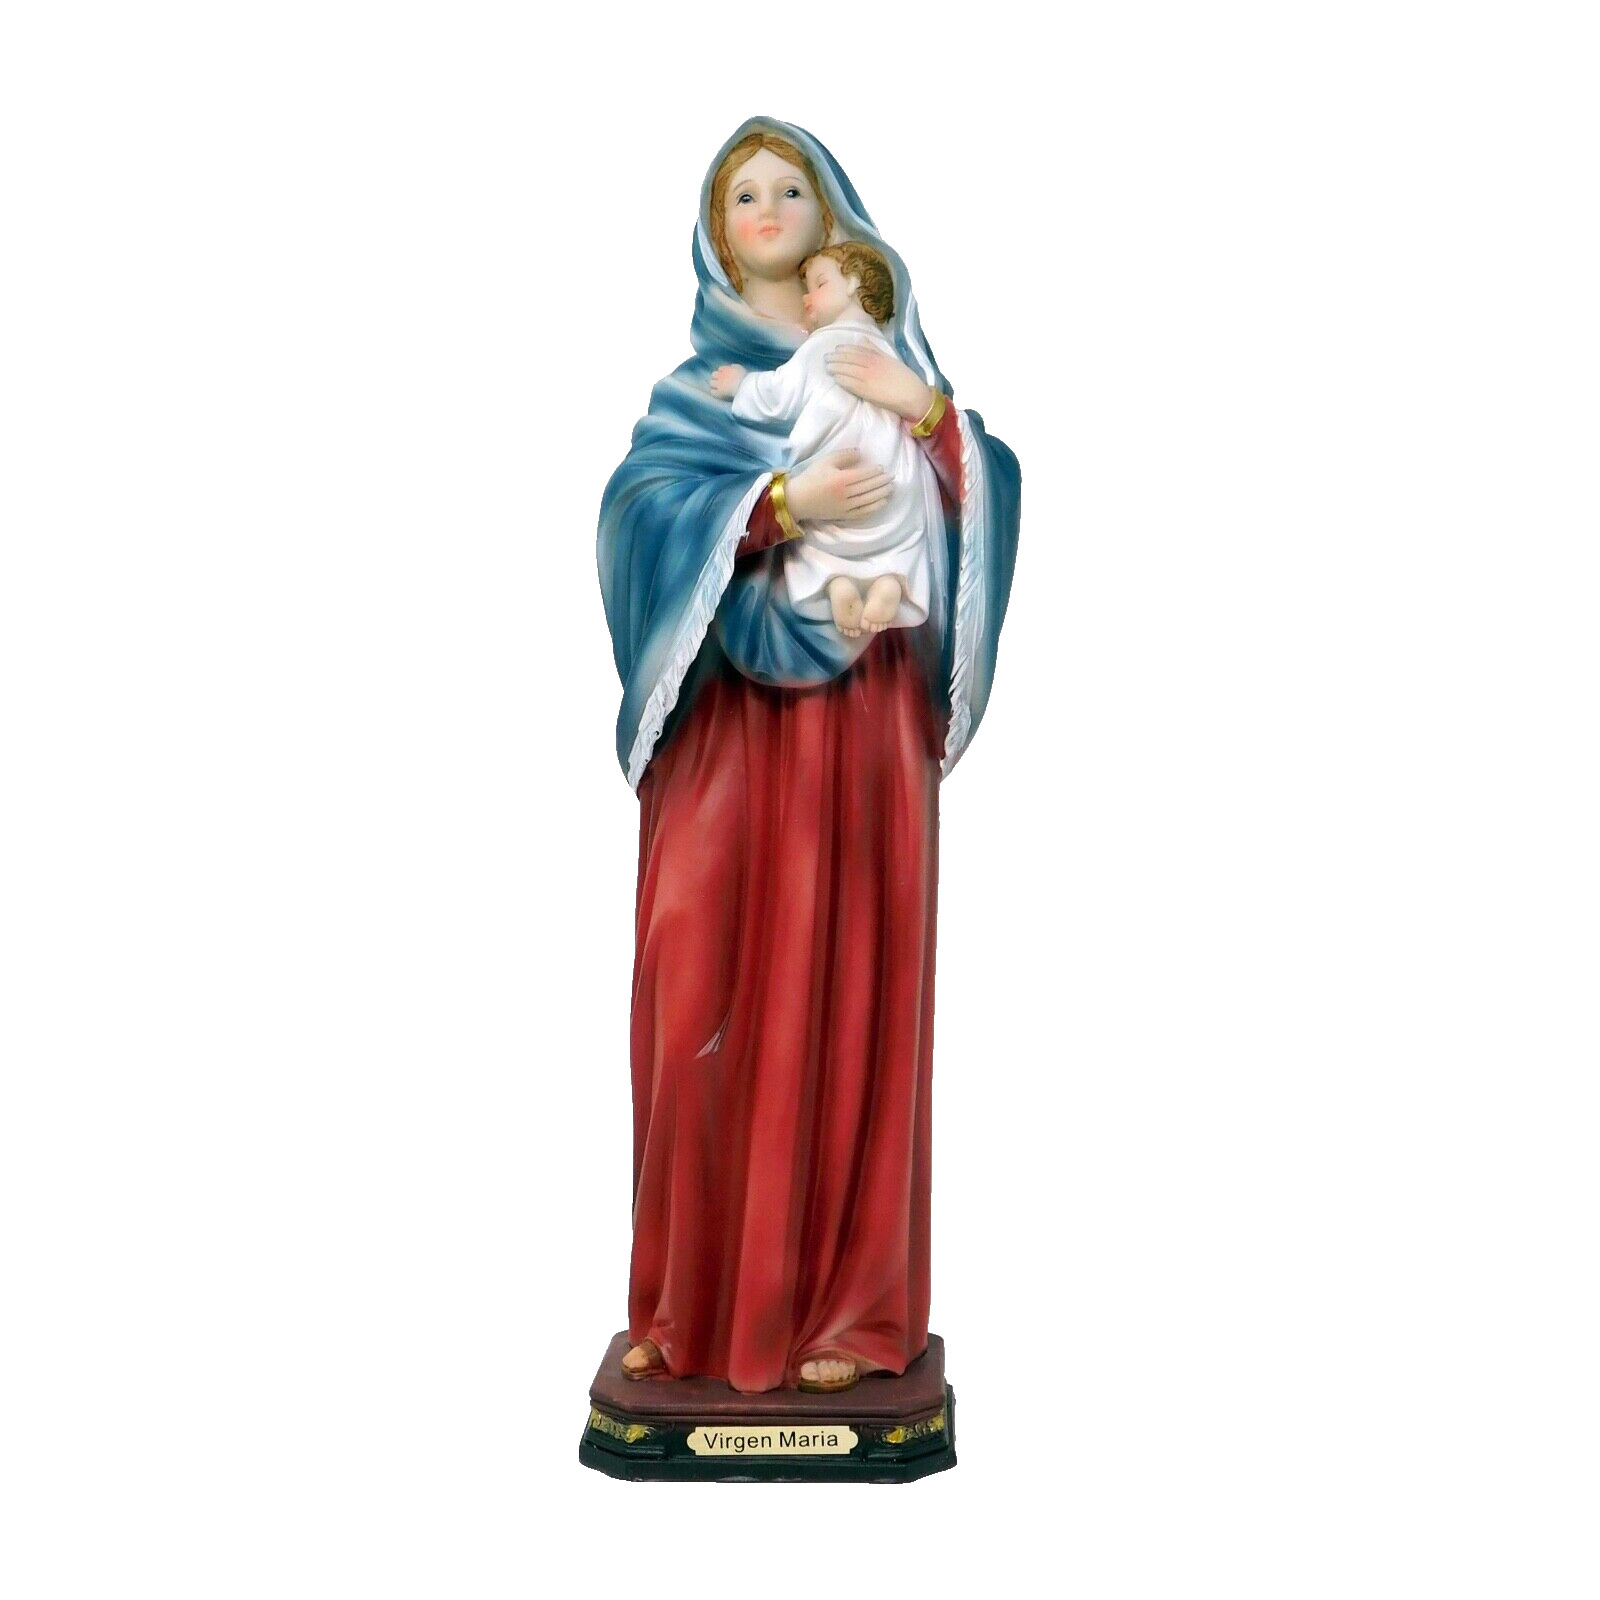 Virgen Maria/ Virgin Mary  16 Inch Stunning Resin Figure